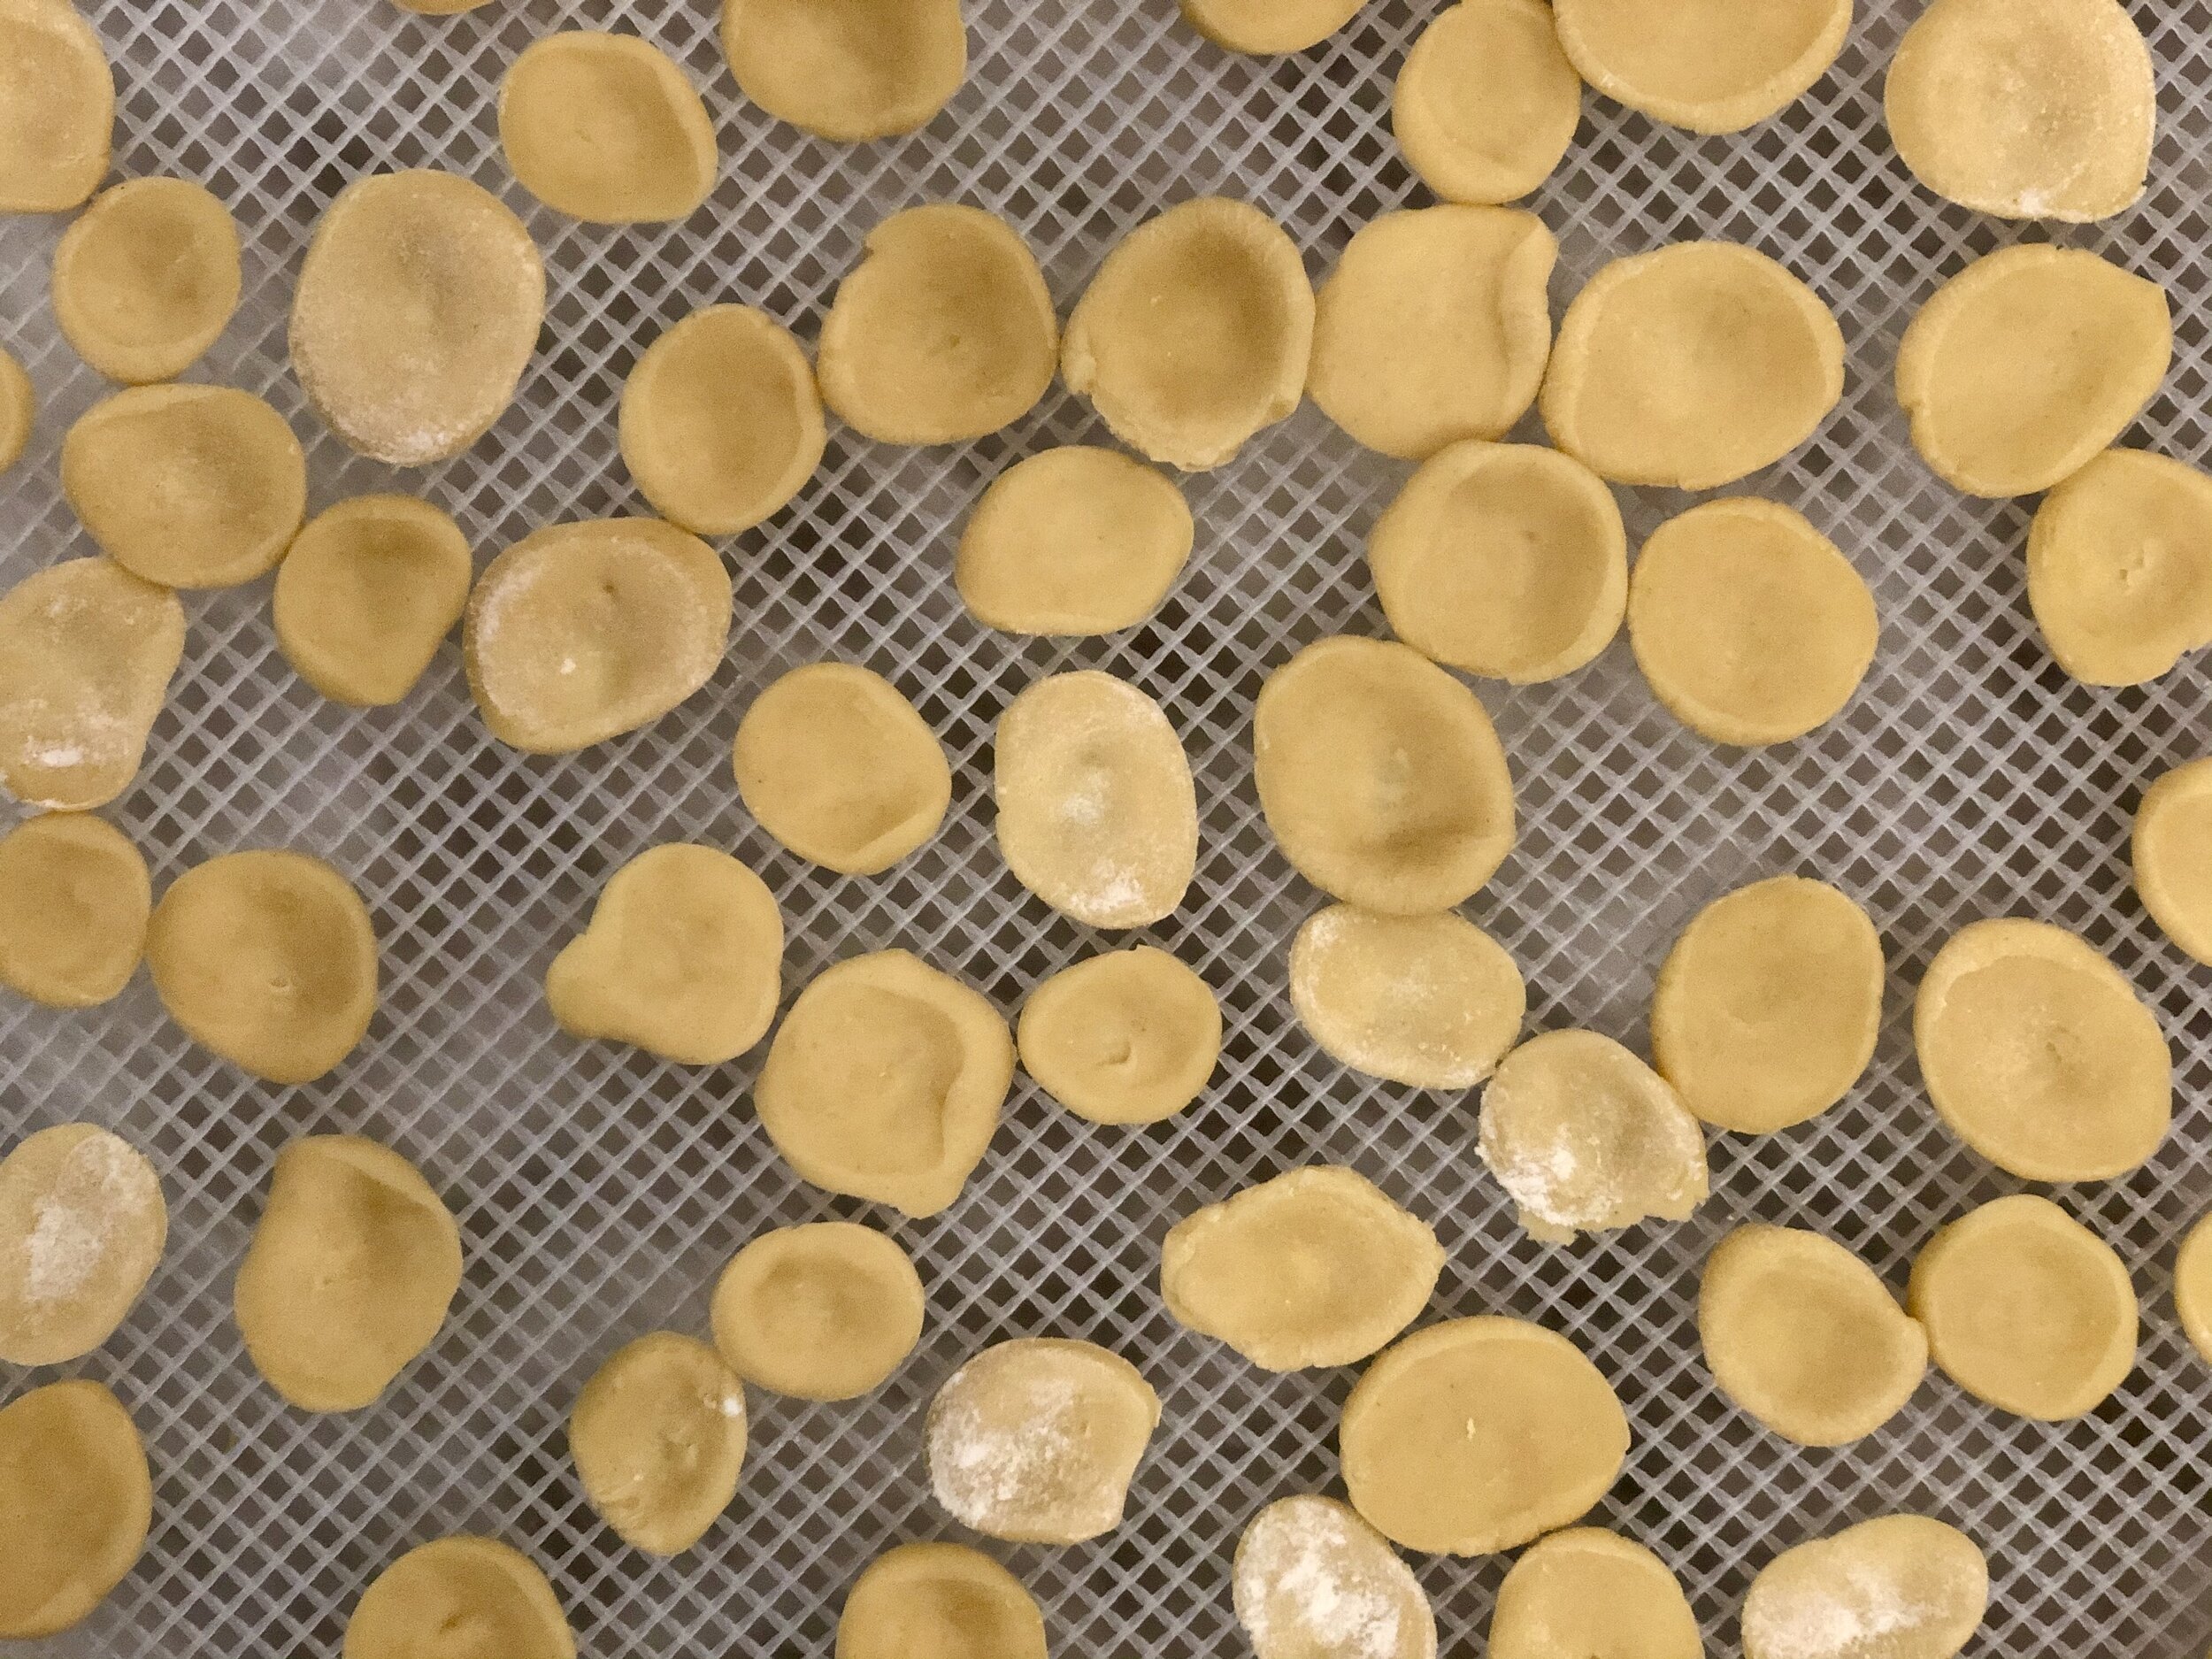 Homemade Cavatelli Pasta - Inside The Rustic Kitchen